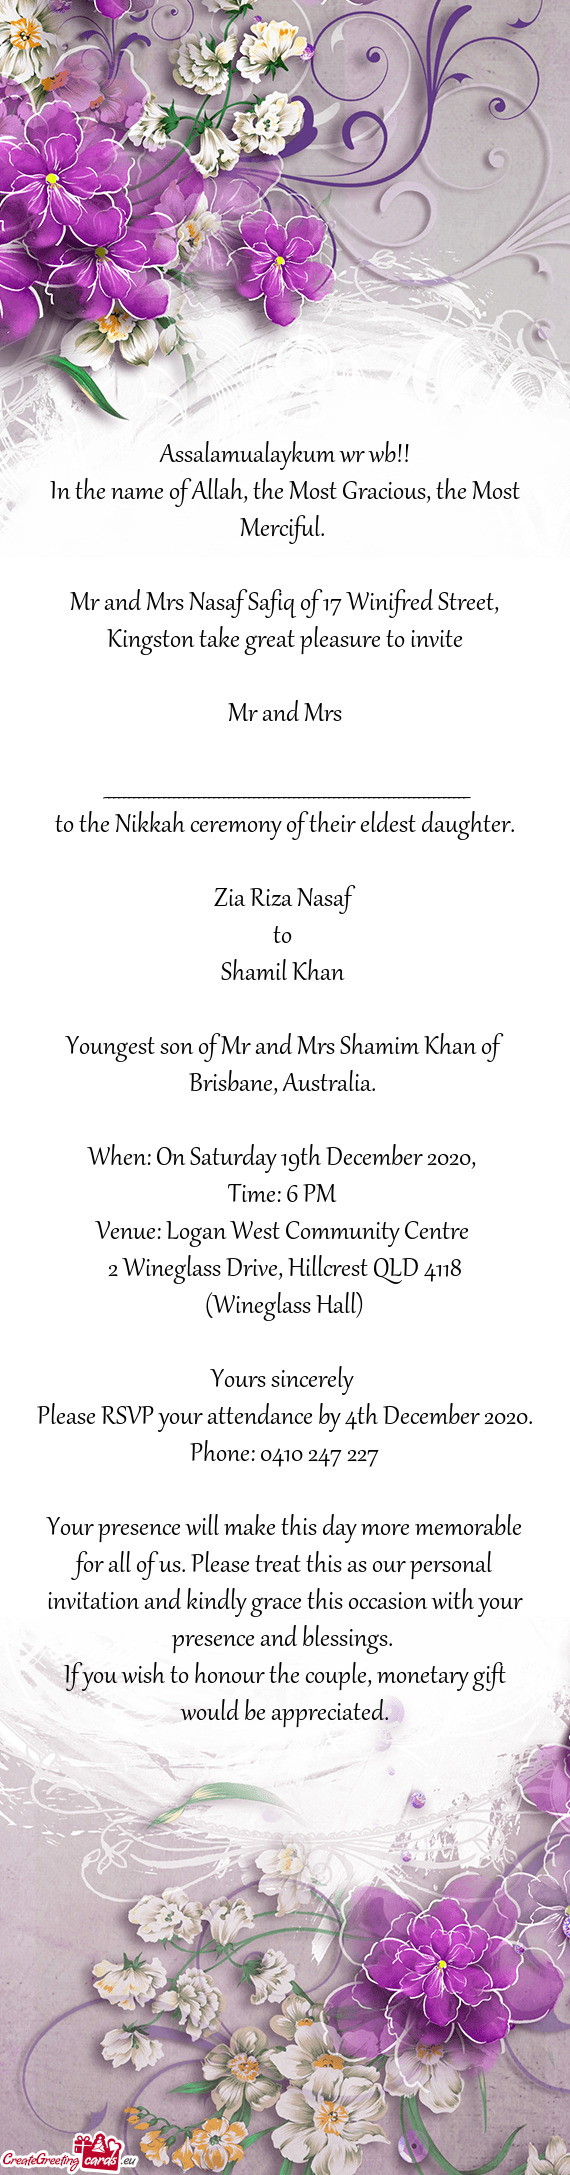 Youngest son of Mr and Mrs Shamim Khan of Brisbane, Australia